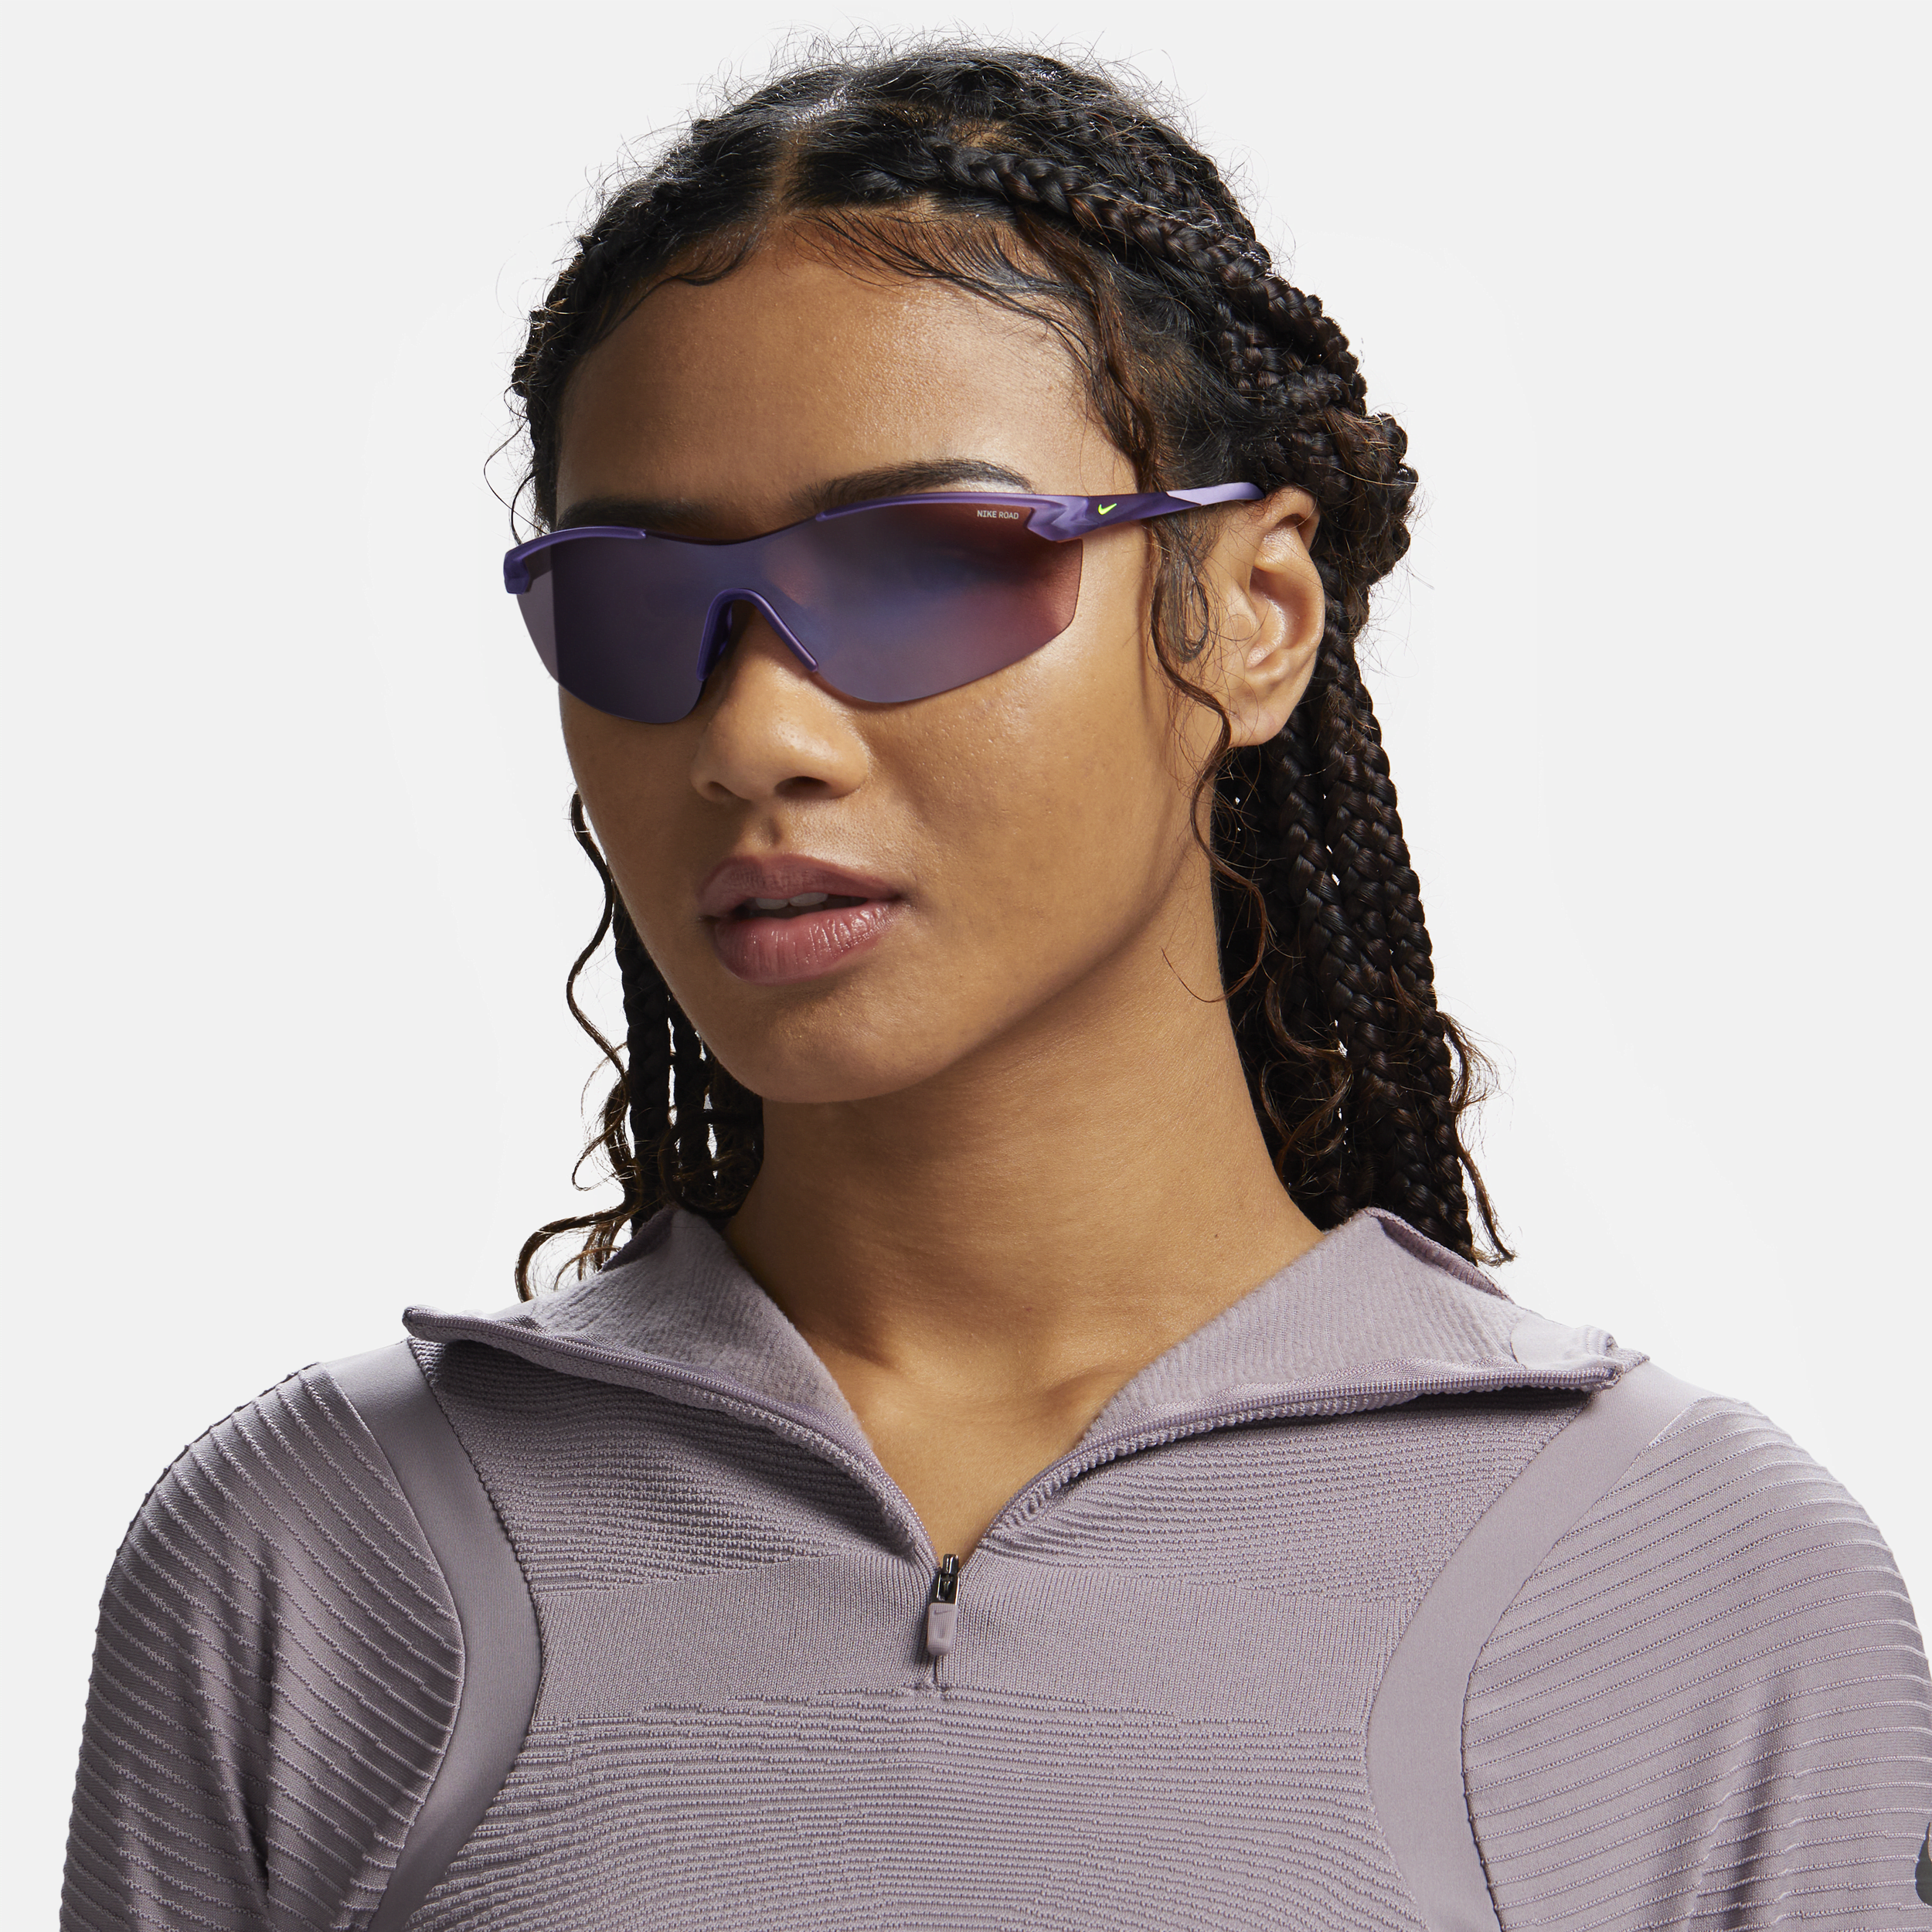 Nike Women's Victory Elite Road Tint Sunglasses In Purple